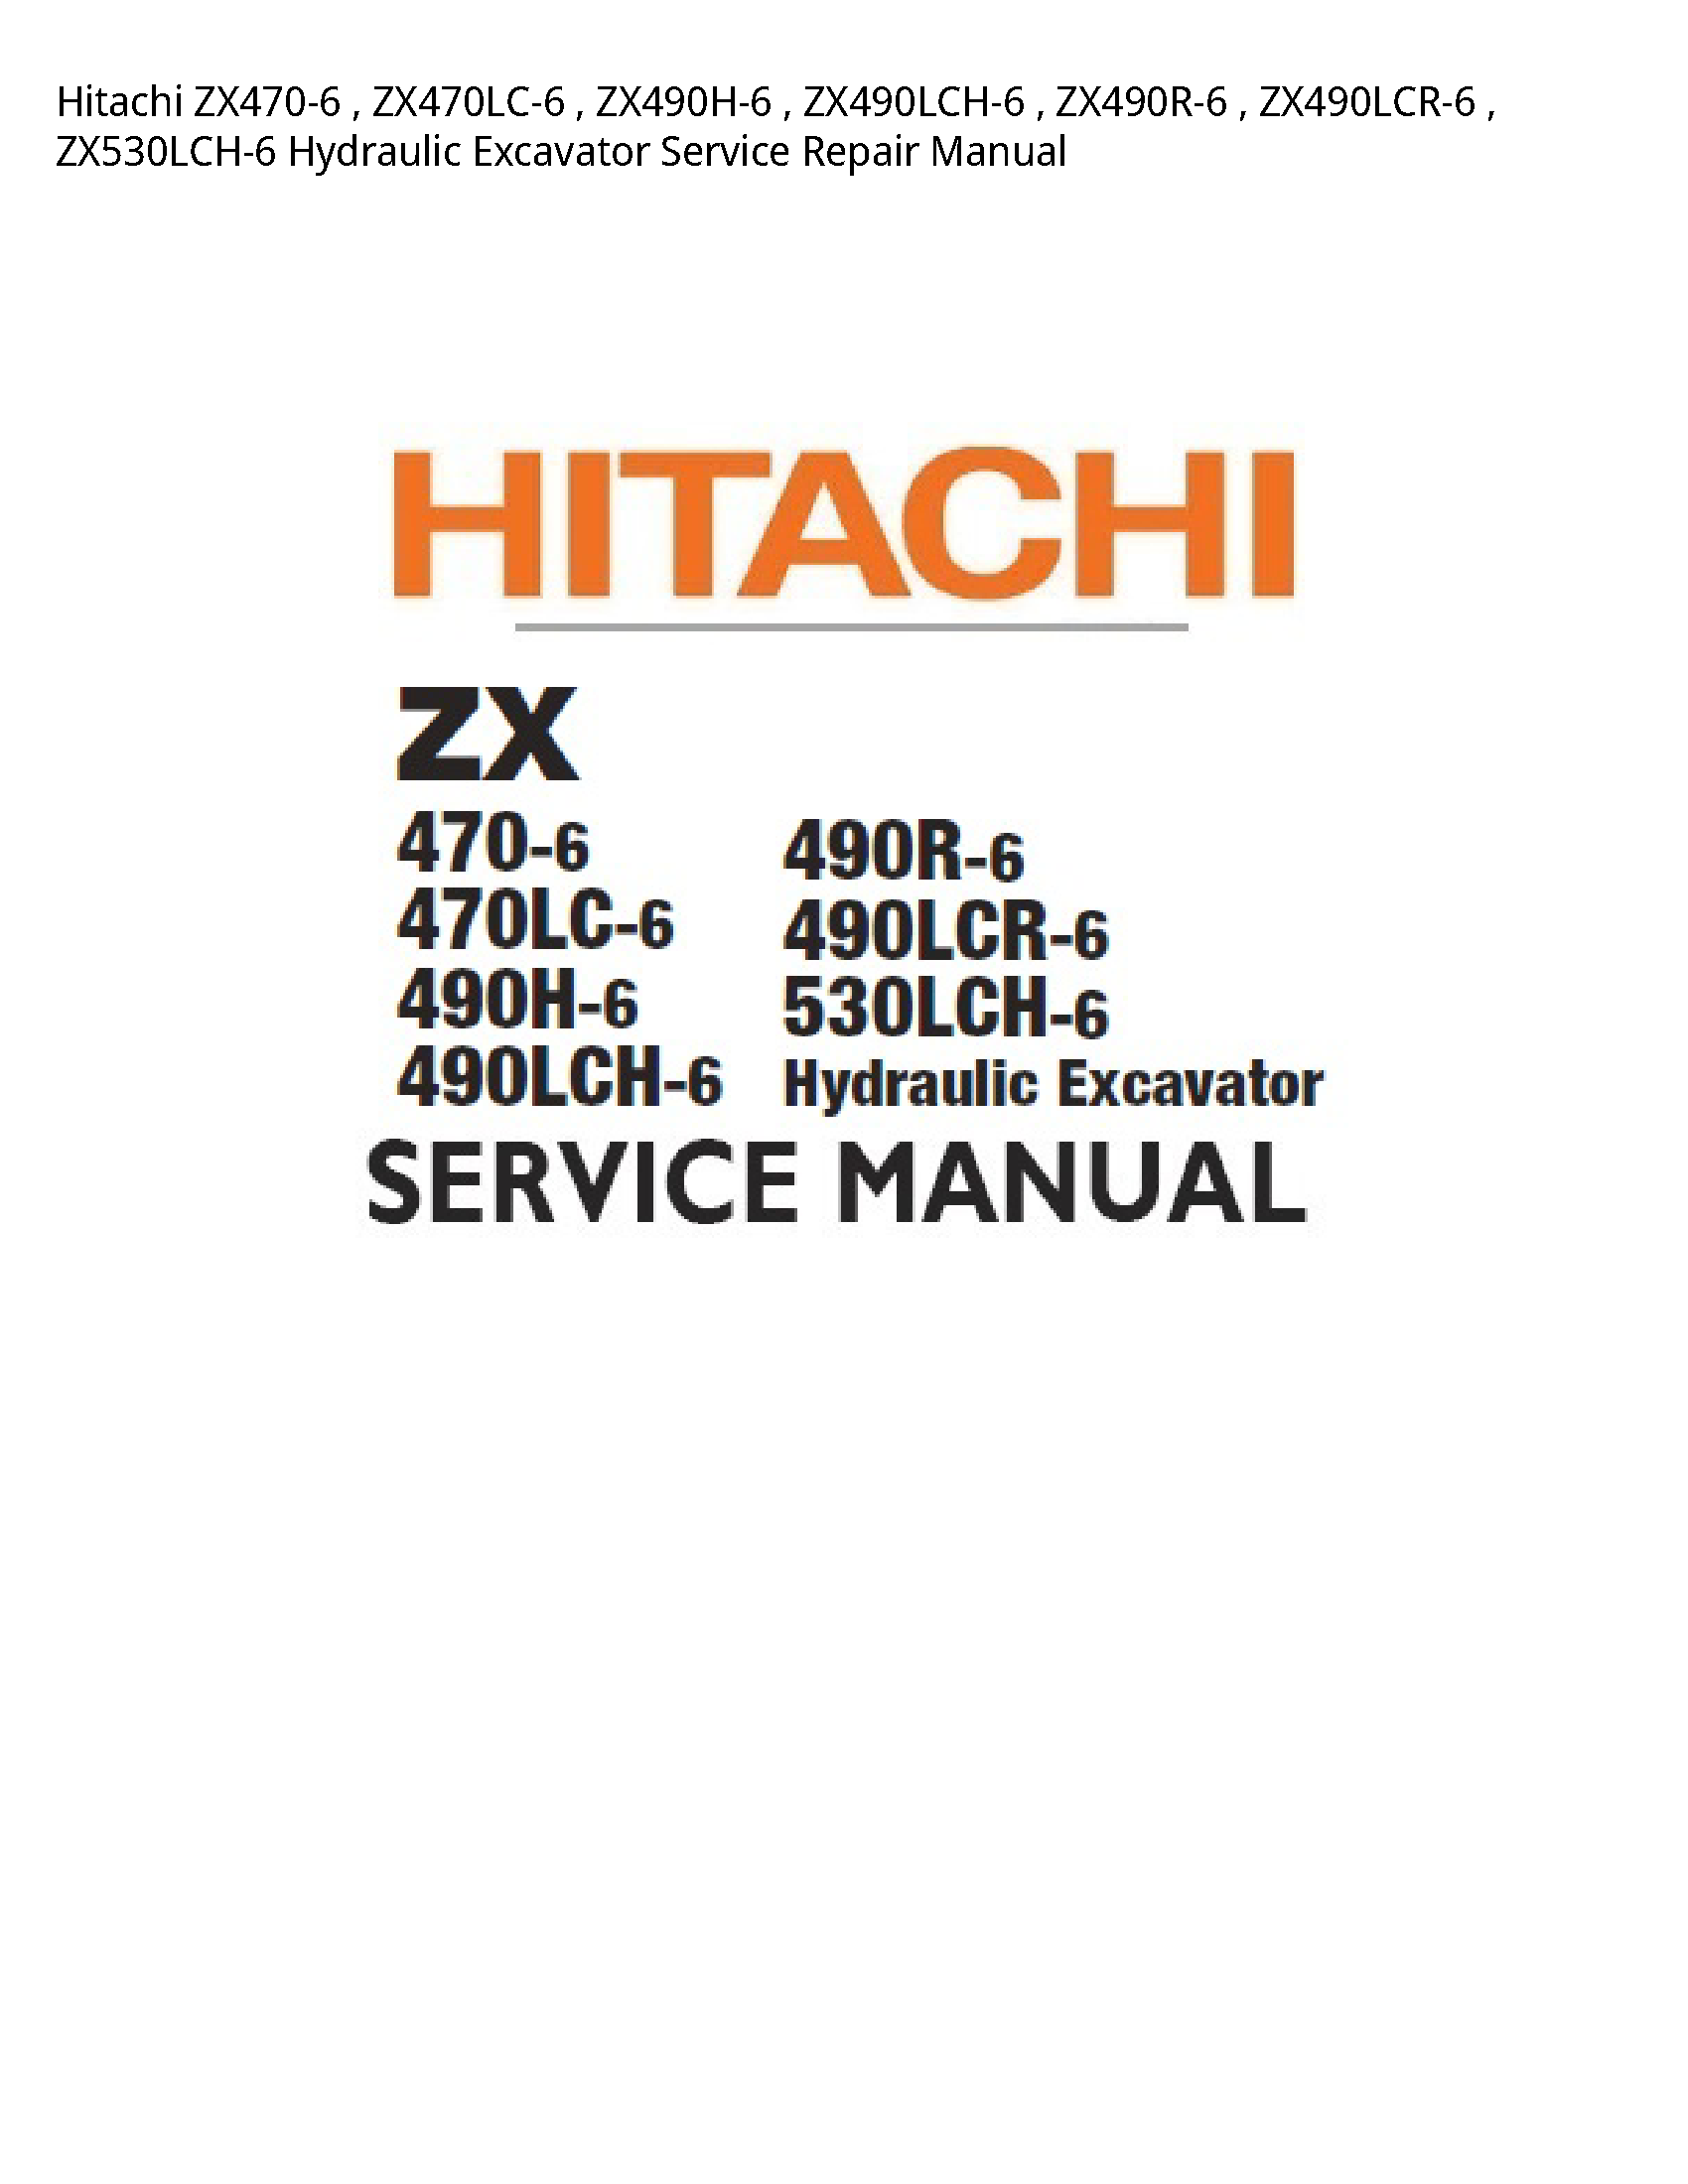 Hitachi ZX470-6 Hydraulic Excavator manual